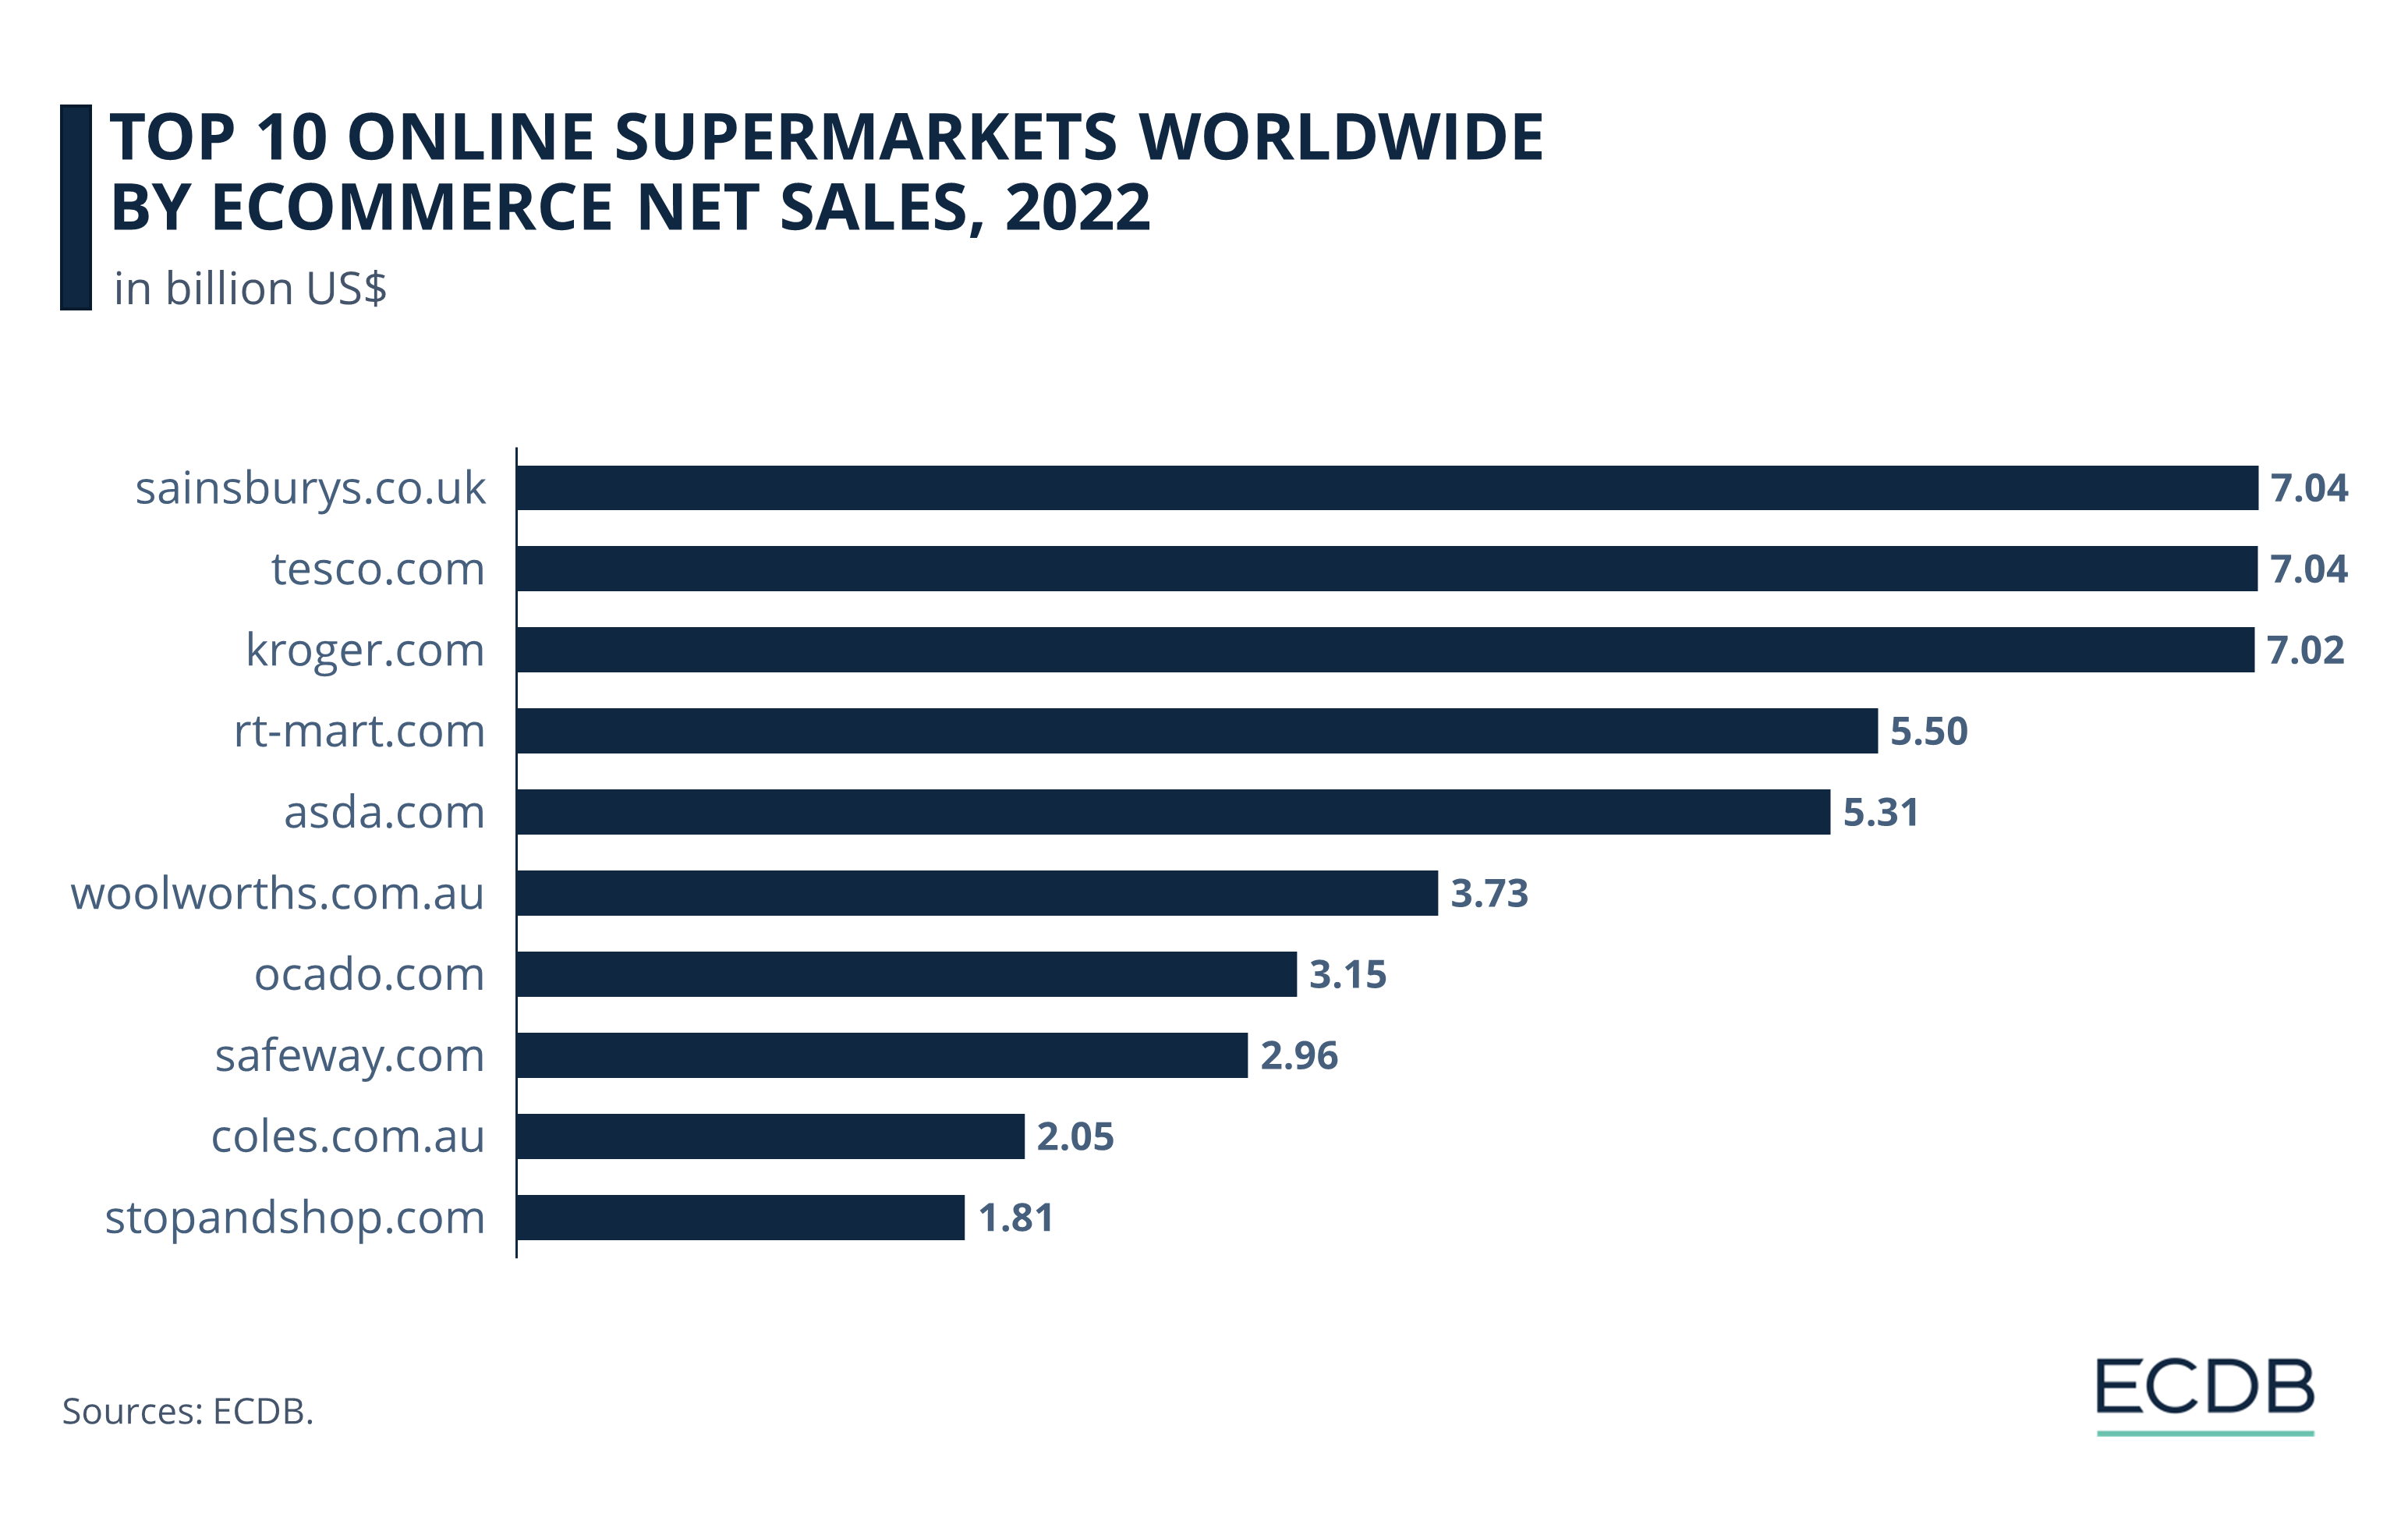 Top 10 Online Supermarkets Worldwide by eCommerce Net Sales, 2022